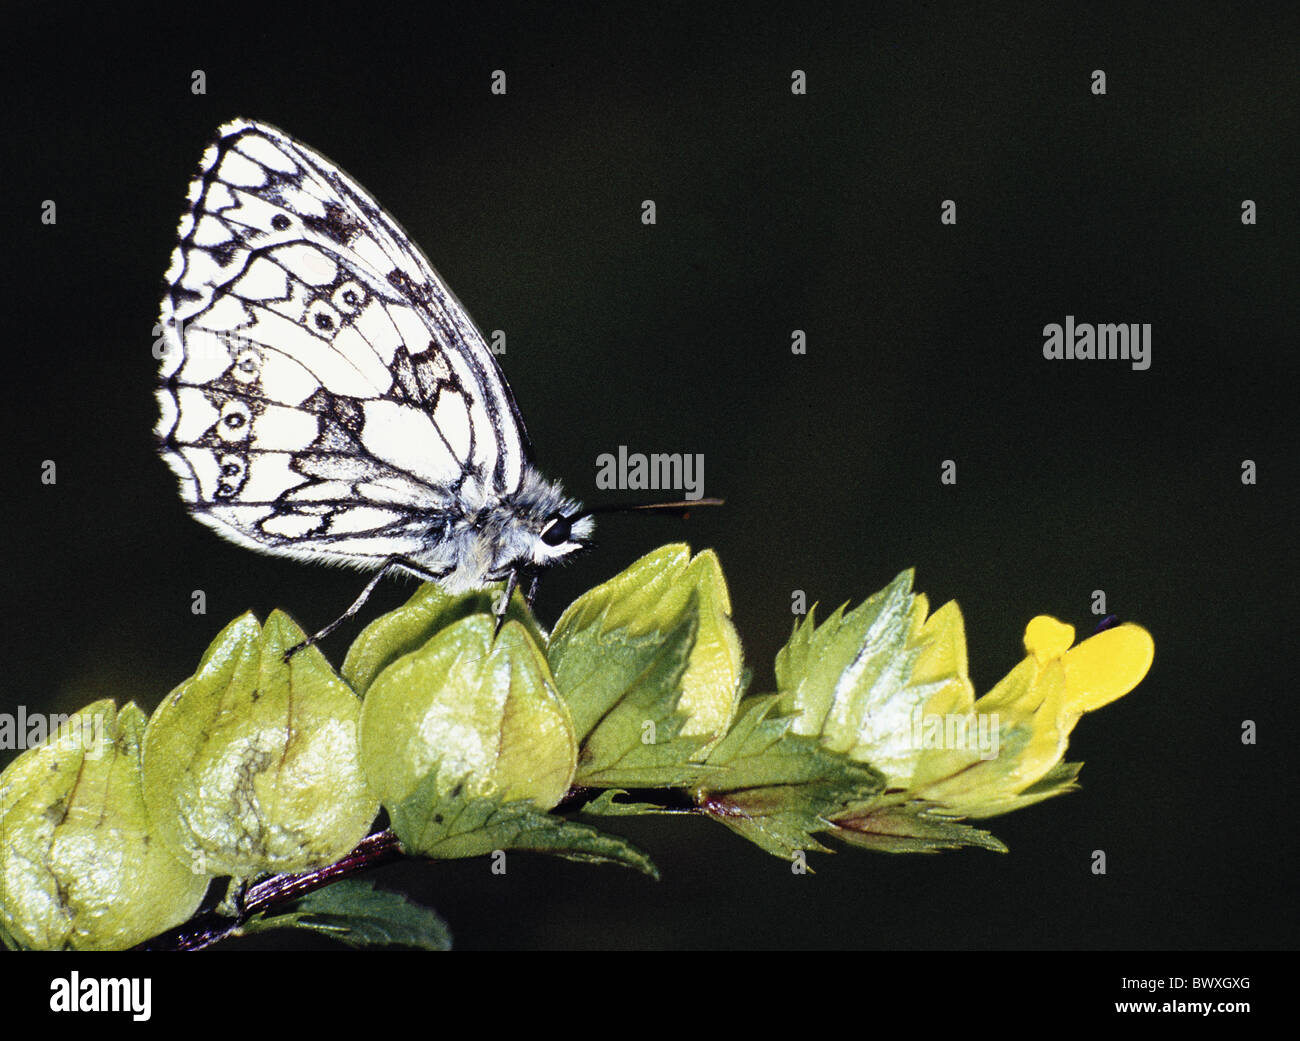 Planta de tablero de ajedrez-butterfly butterfly muestras patrones de blanco y negro sit Foto de stock